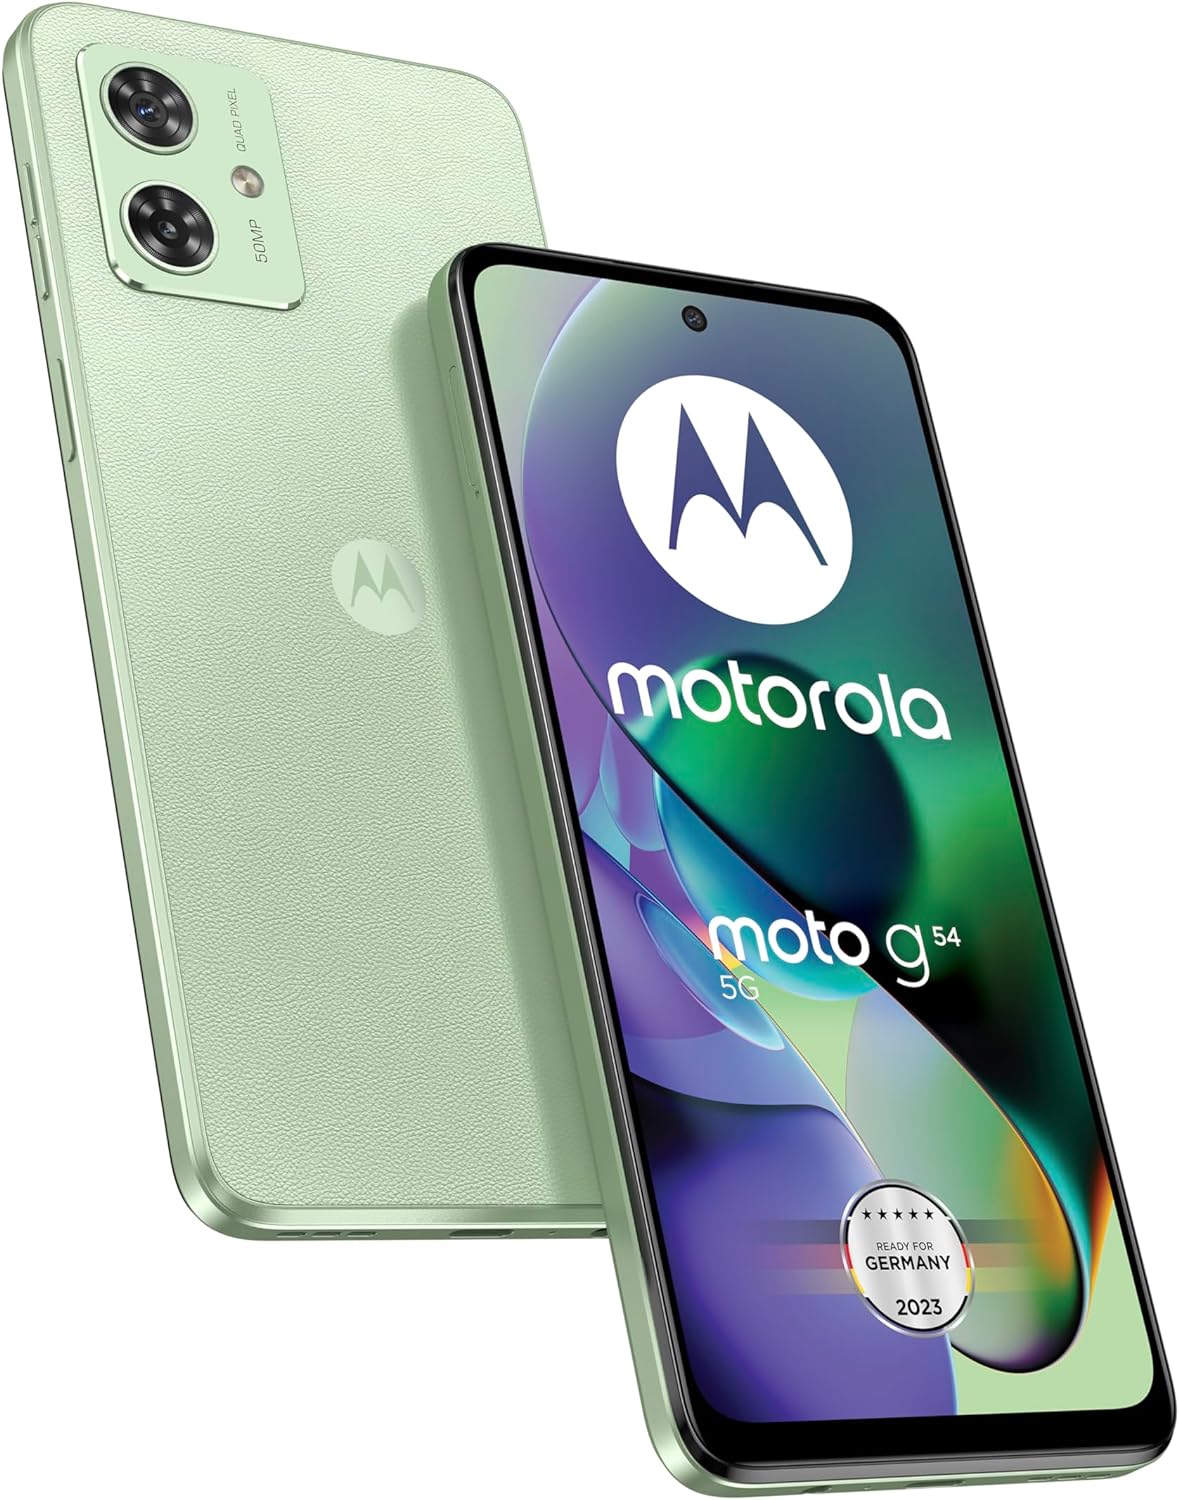 Motorola Moto G54 Dual-SIM 256GB ROM + 8GB RAM (Only GSM | No CDMA) with eSim Factory Unlocked 5G Smartphone (Mint Green) - International Version